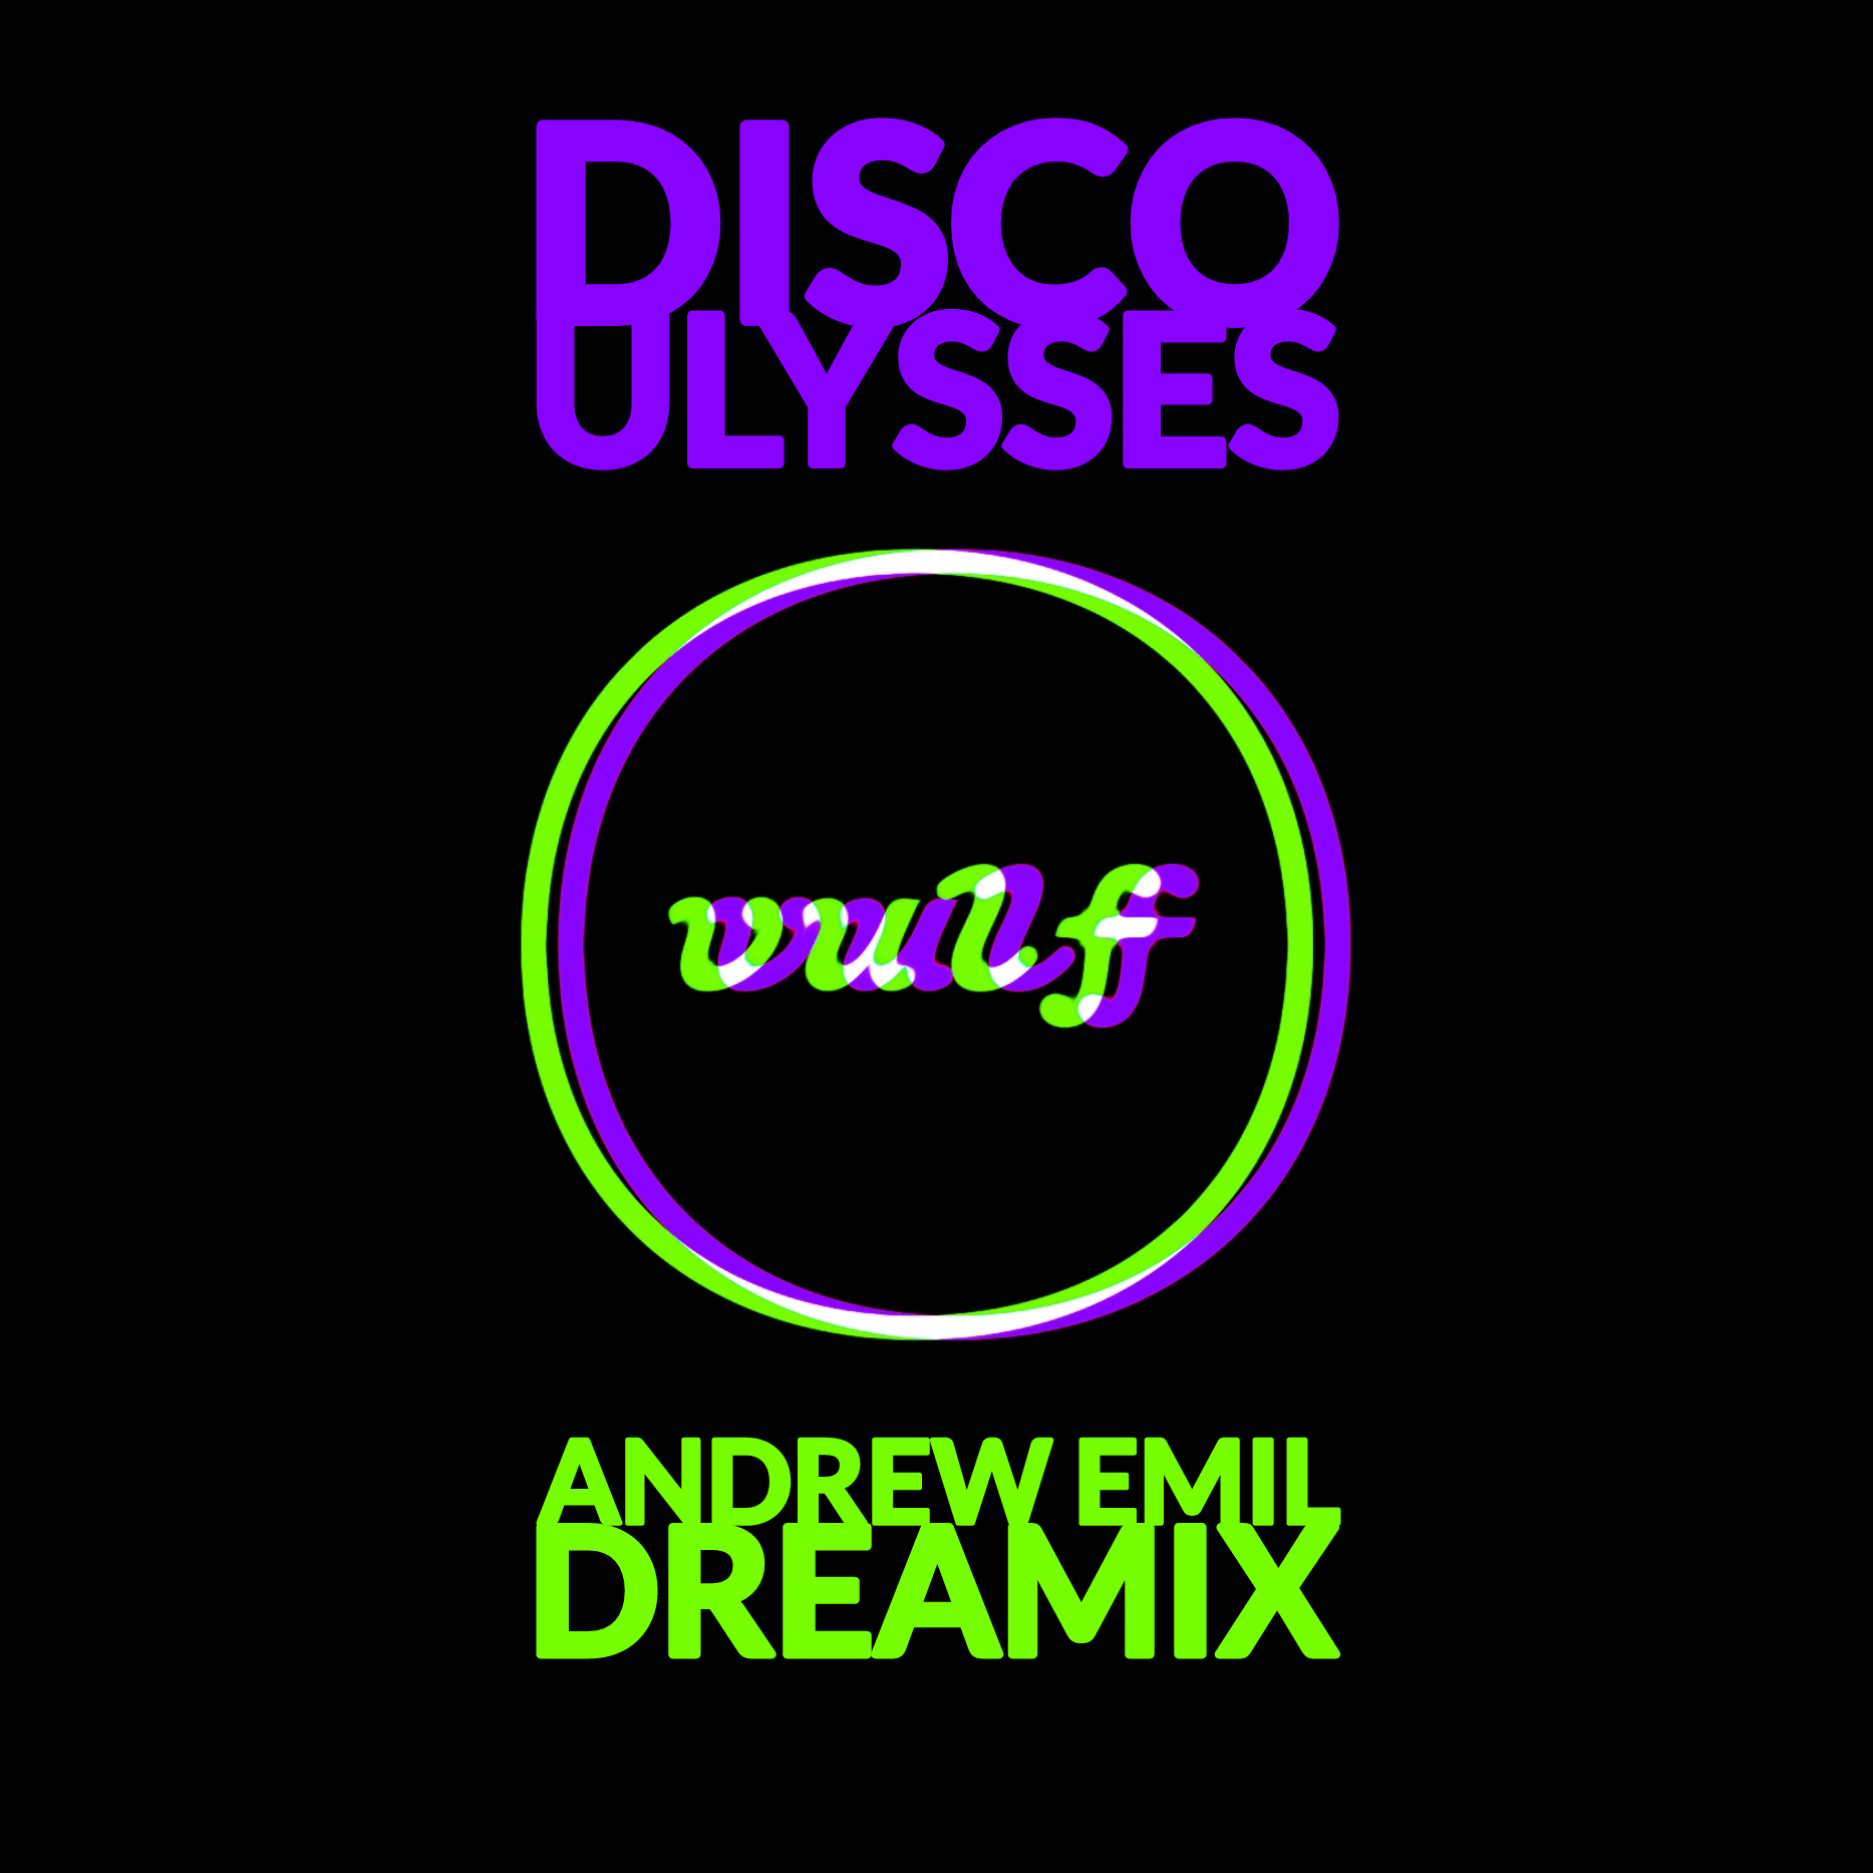 Disco Ulysses (Andrew Emil Dreamix)